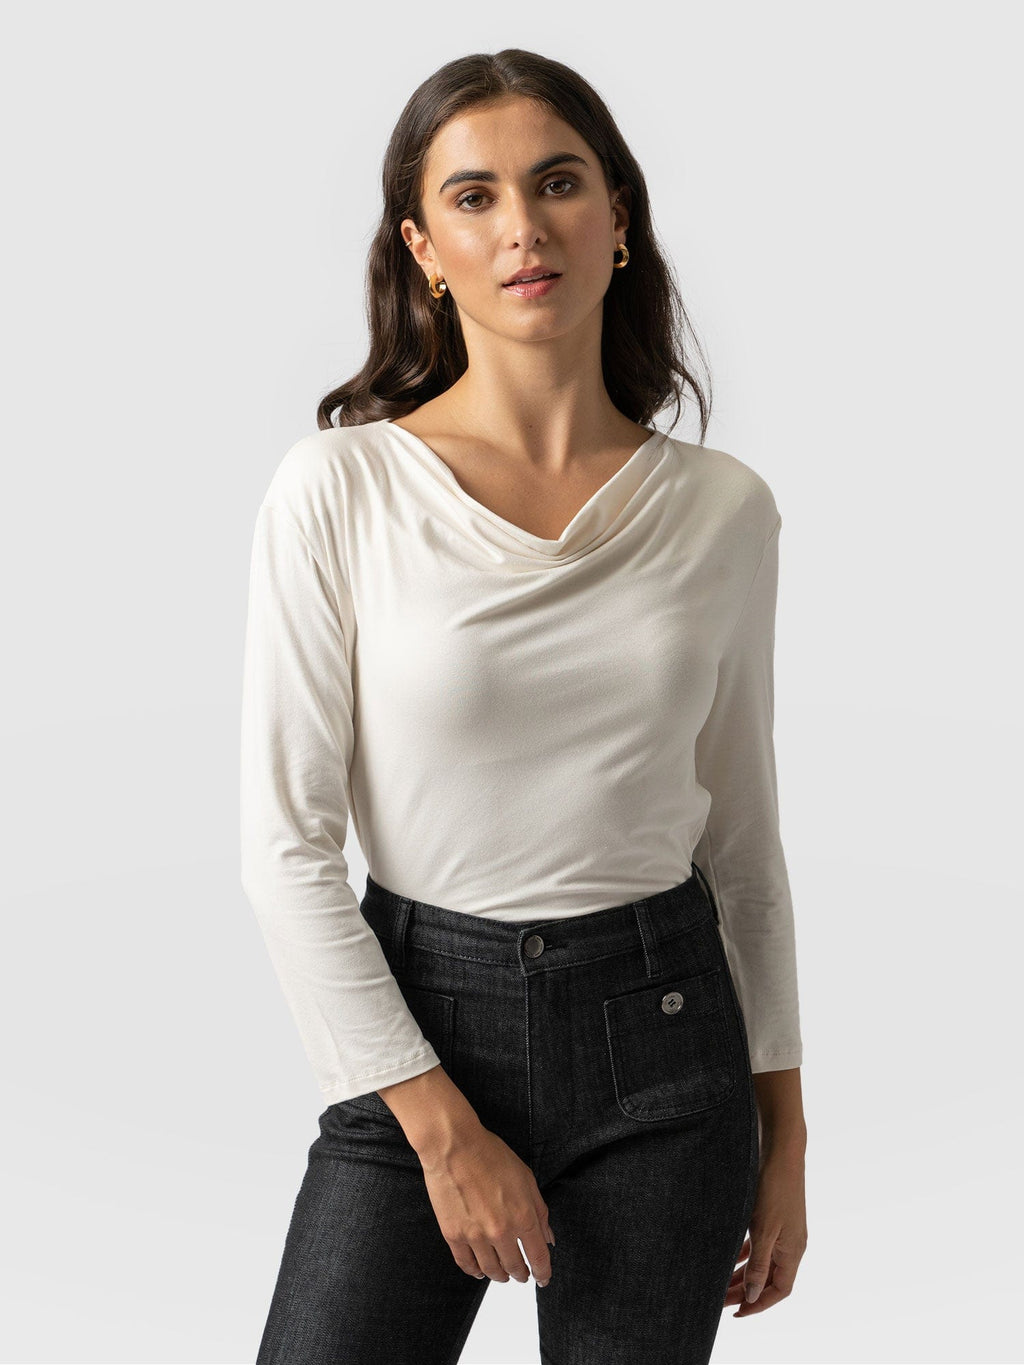 Cowl Neck Tee Cream Long Sleeve - Women's T-Shirts